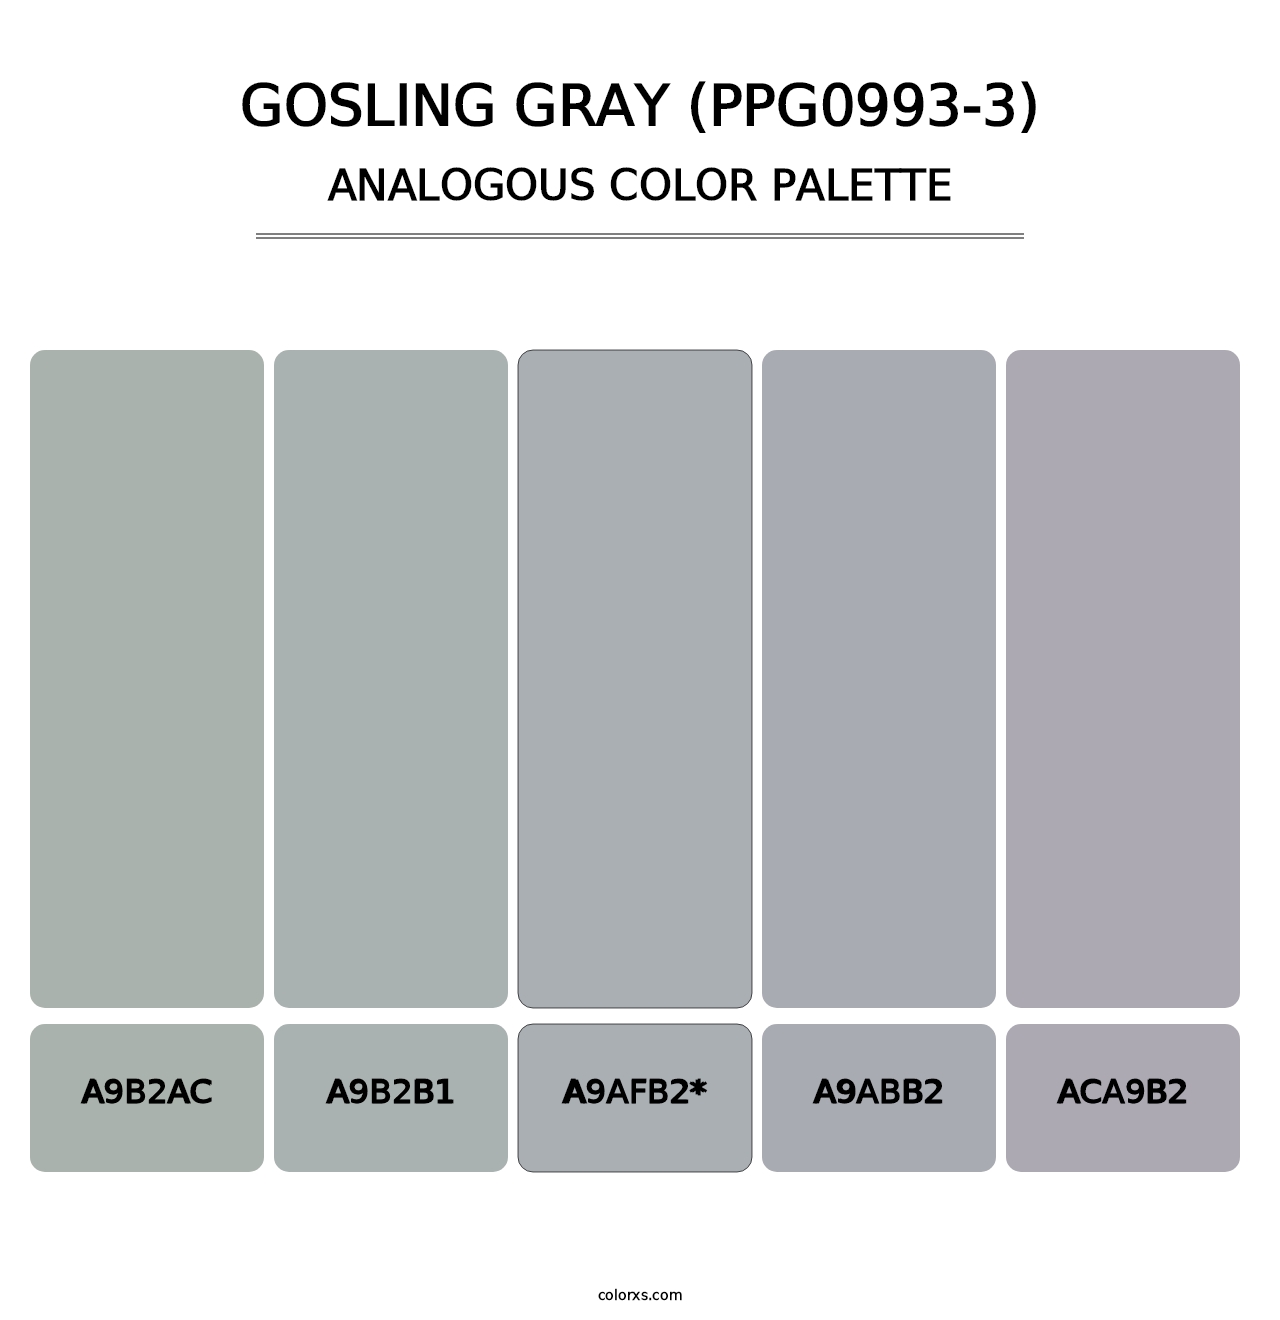 Gosling Gray (PPG0993-3) - Analogous Color Palette